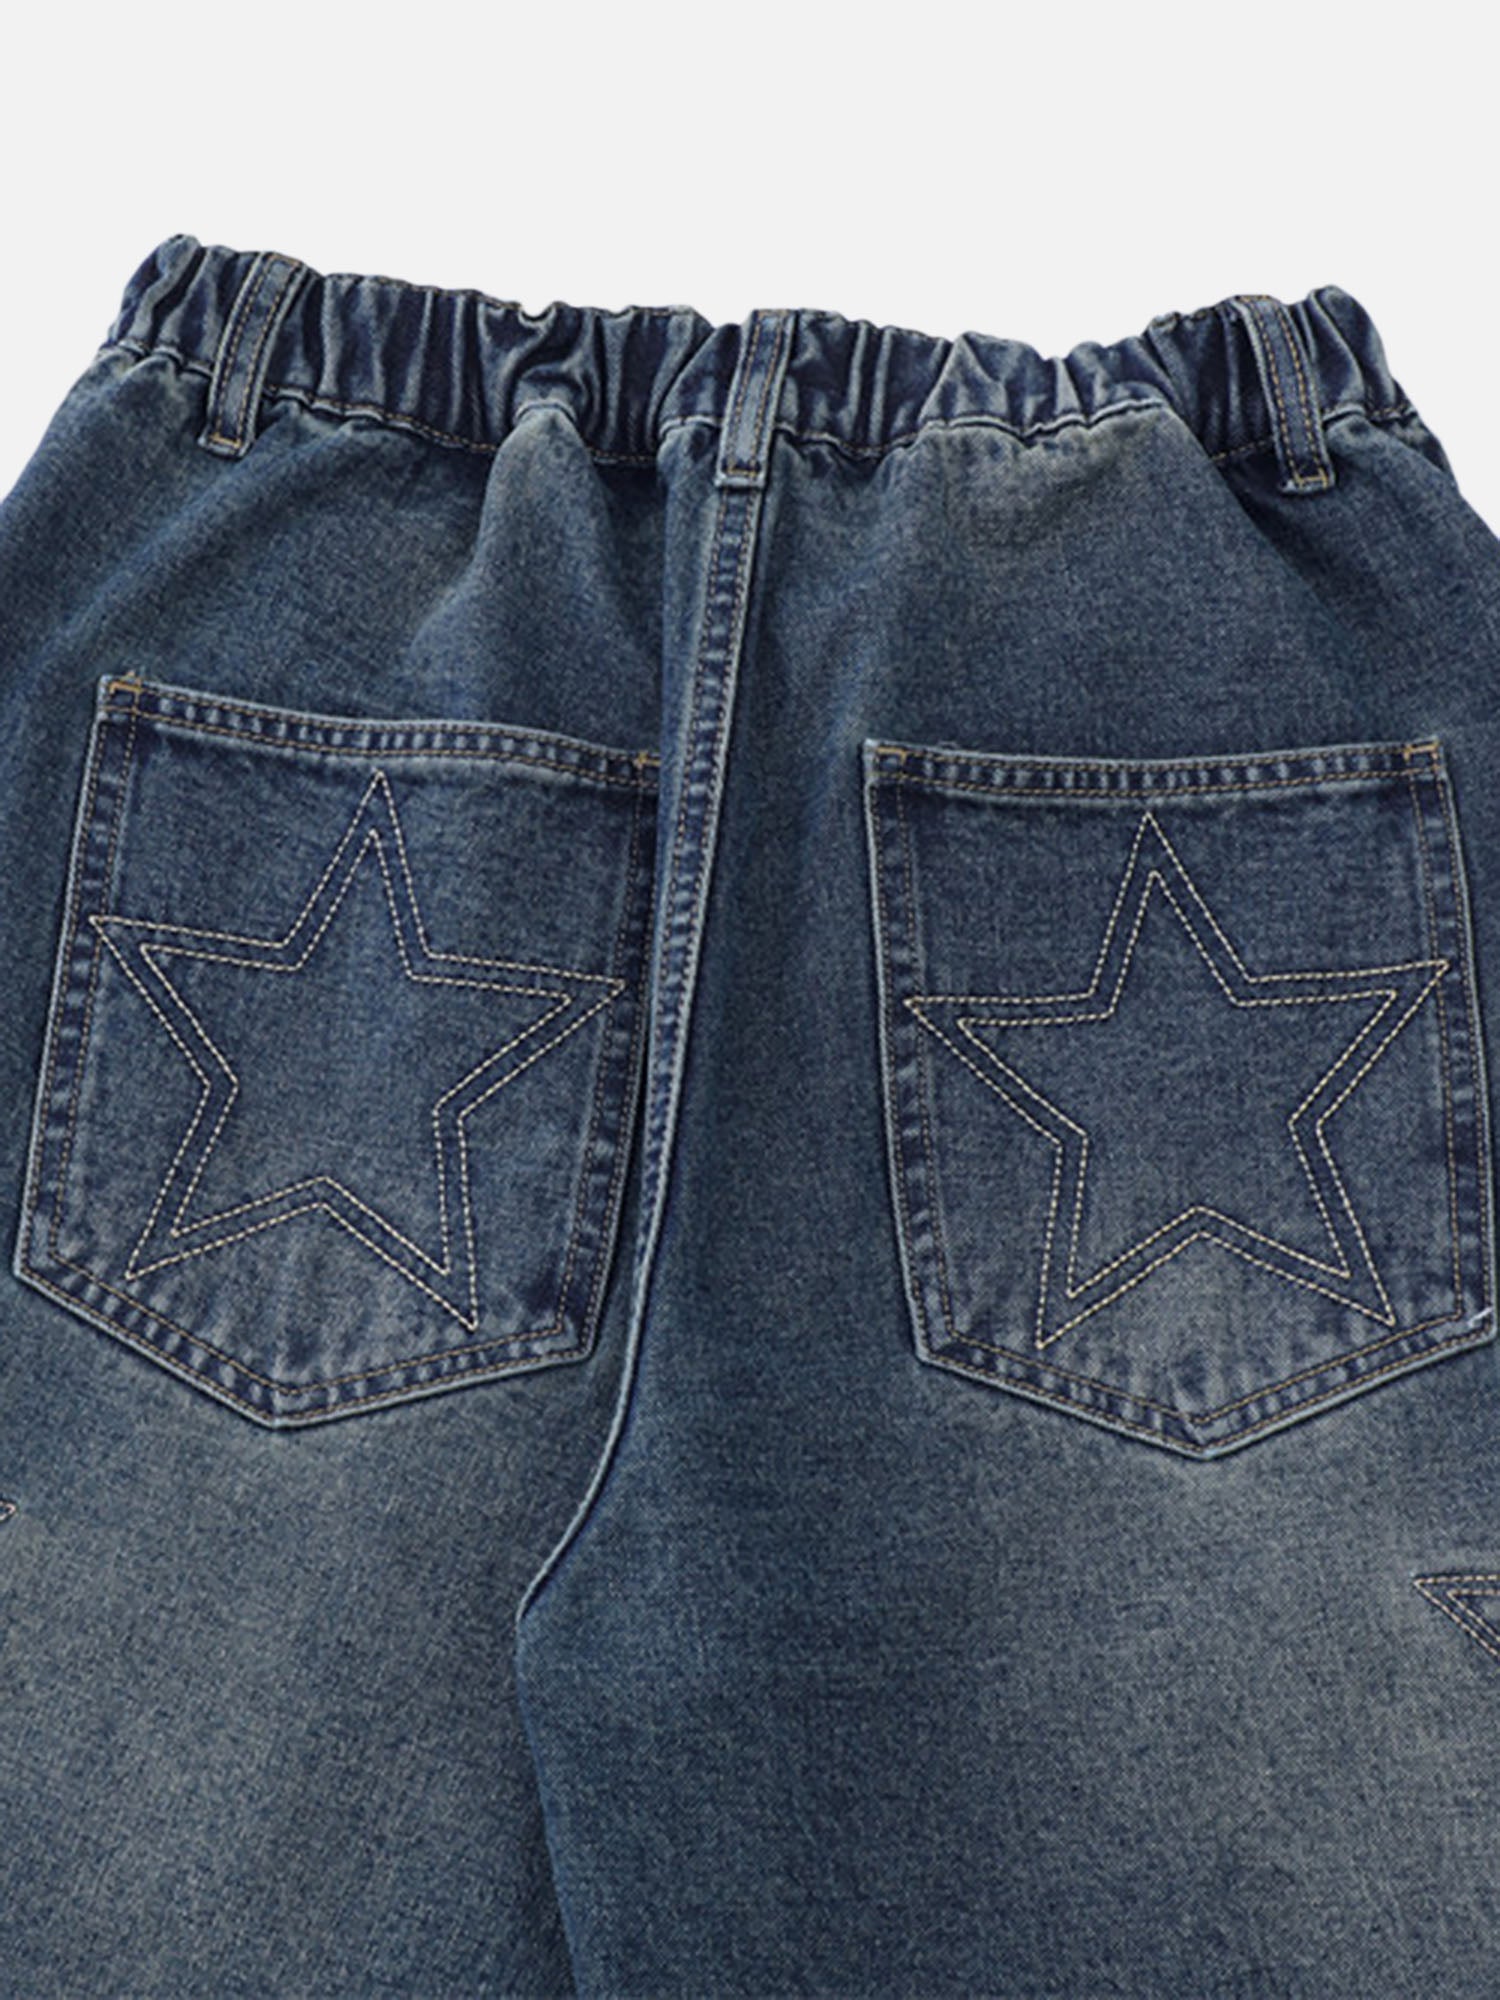 High Street Patchwork Star Embroidered Denim Shorts Jorts